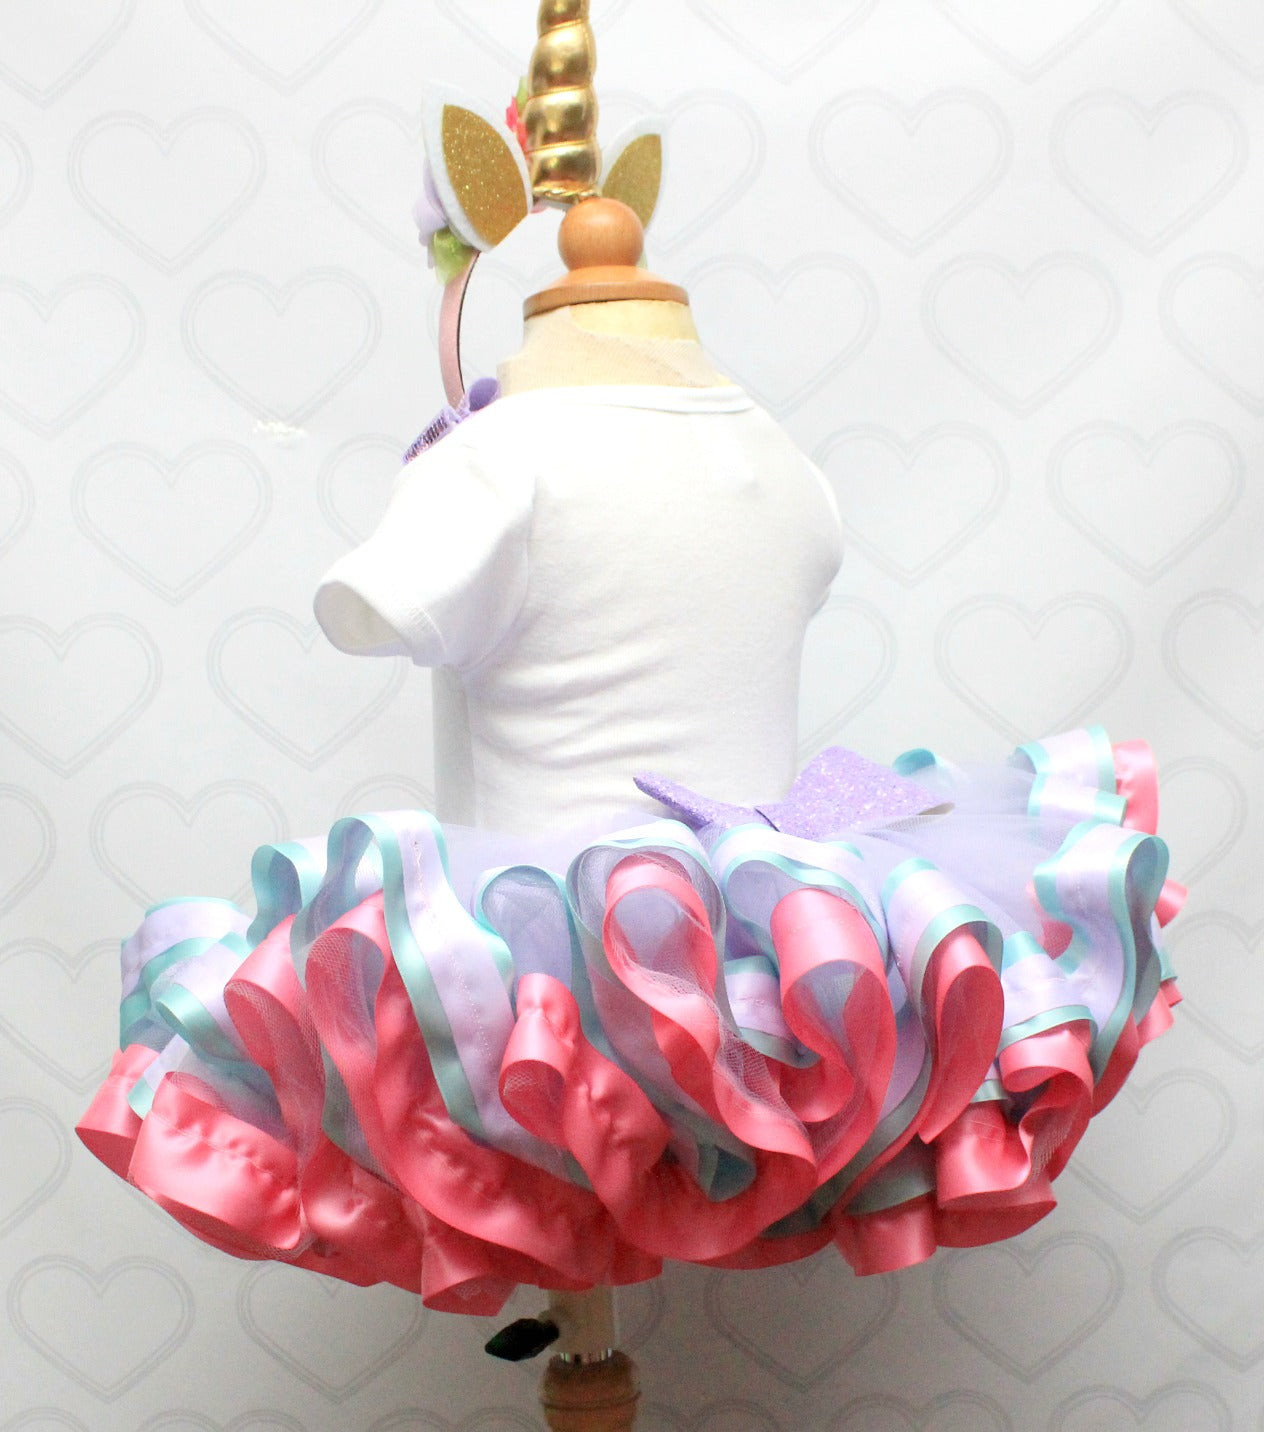 Unicorn lol surprise doll tutu set-Unicorn lol surprise outfit-Unicorn lol dress